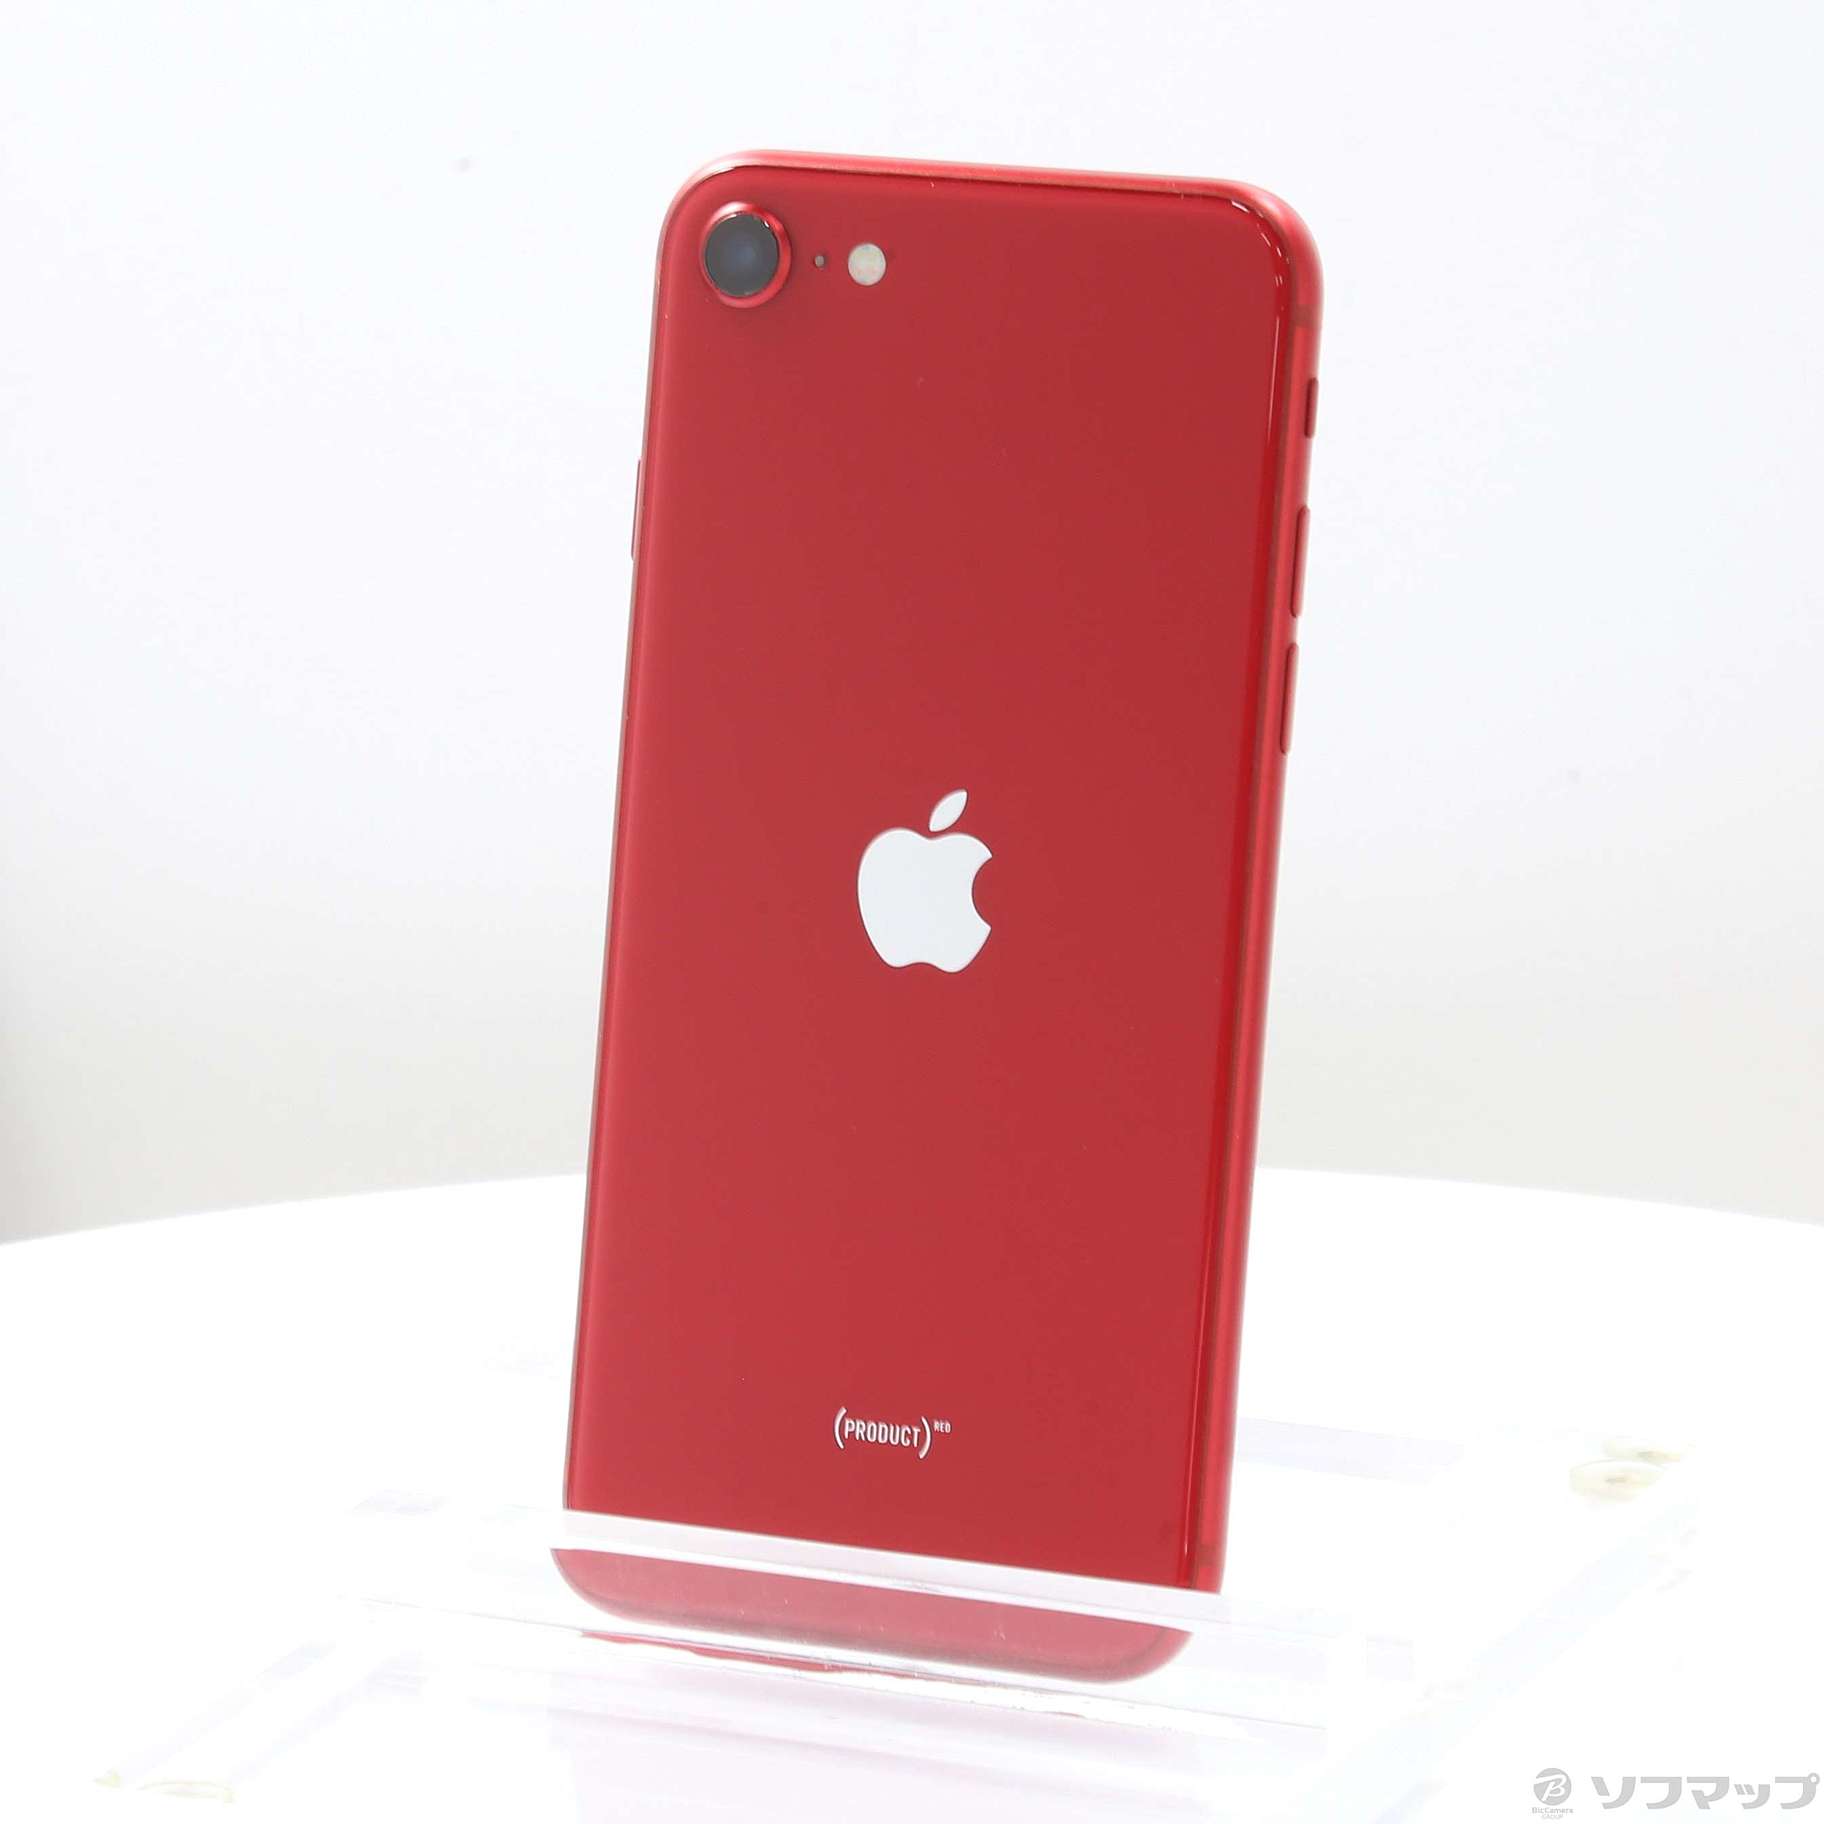 iPhone SE (第2世代) (PRODUCT)RED 64GB SIMフリー [レッド] 中古(白 